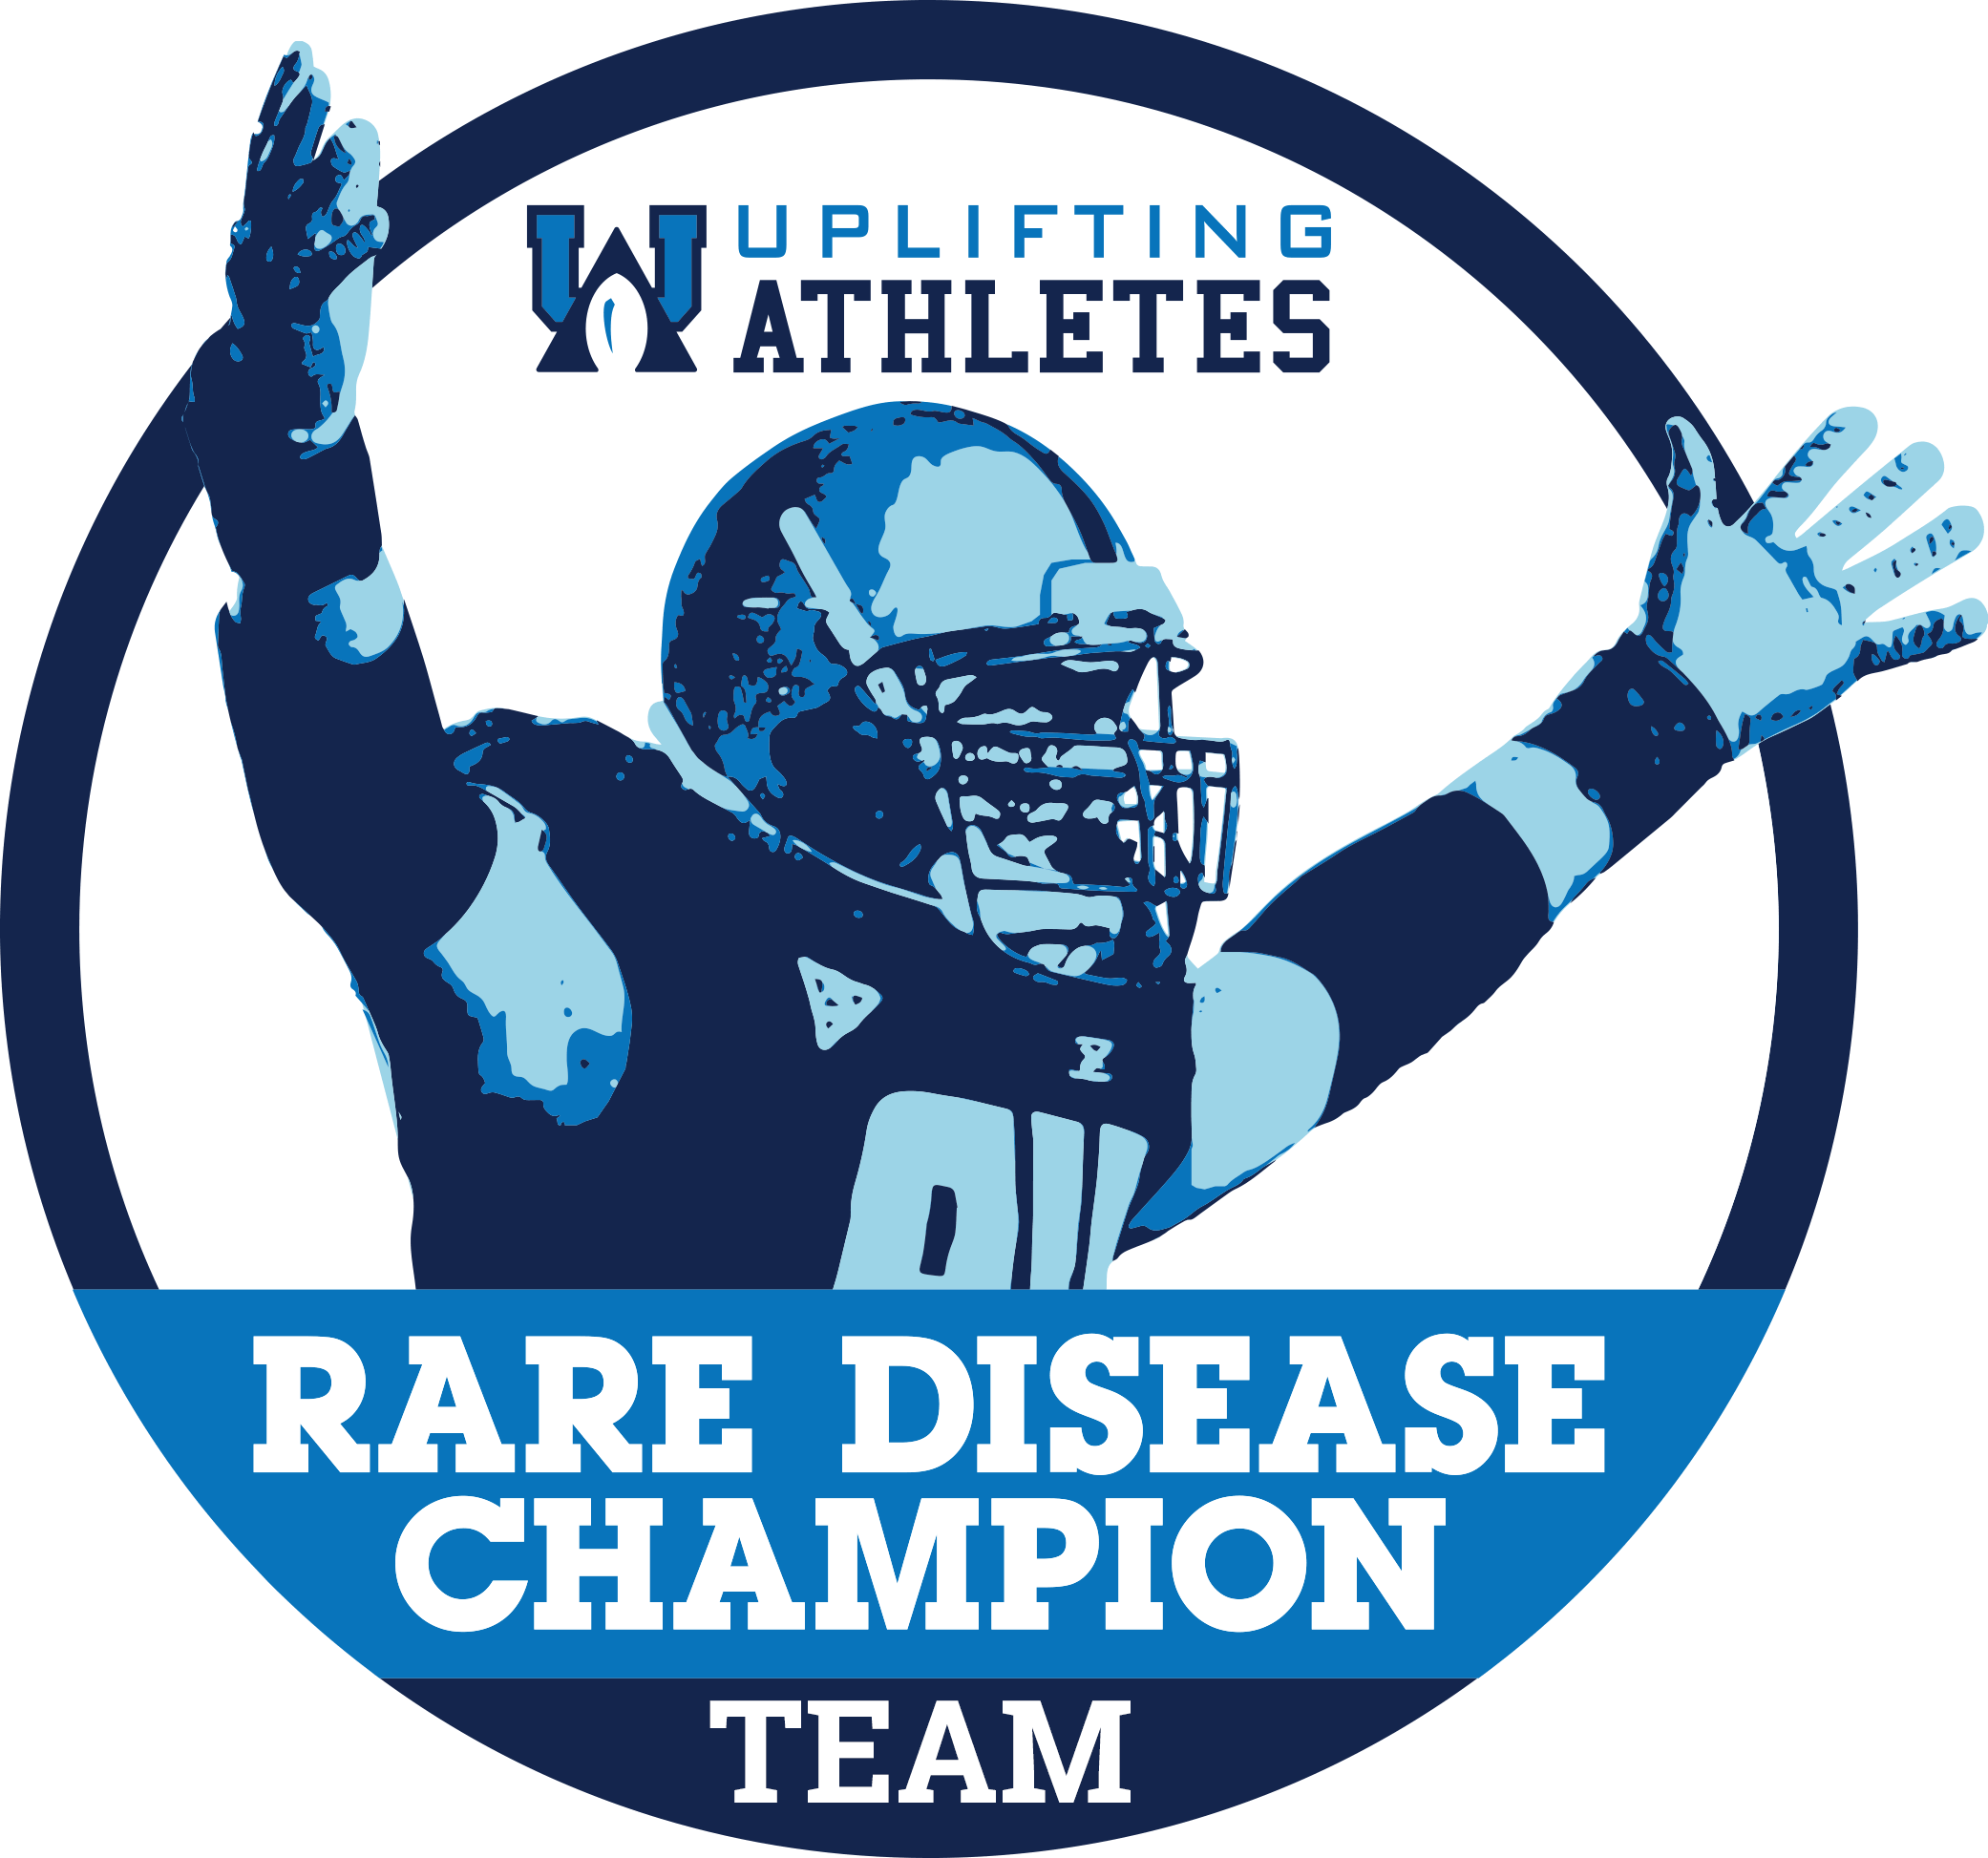 Rare Disease Champion Team